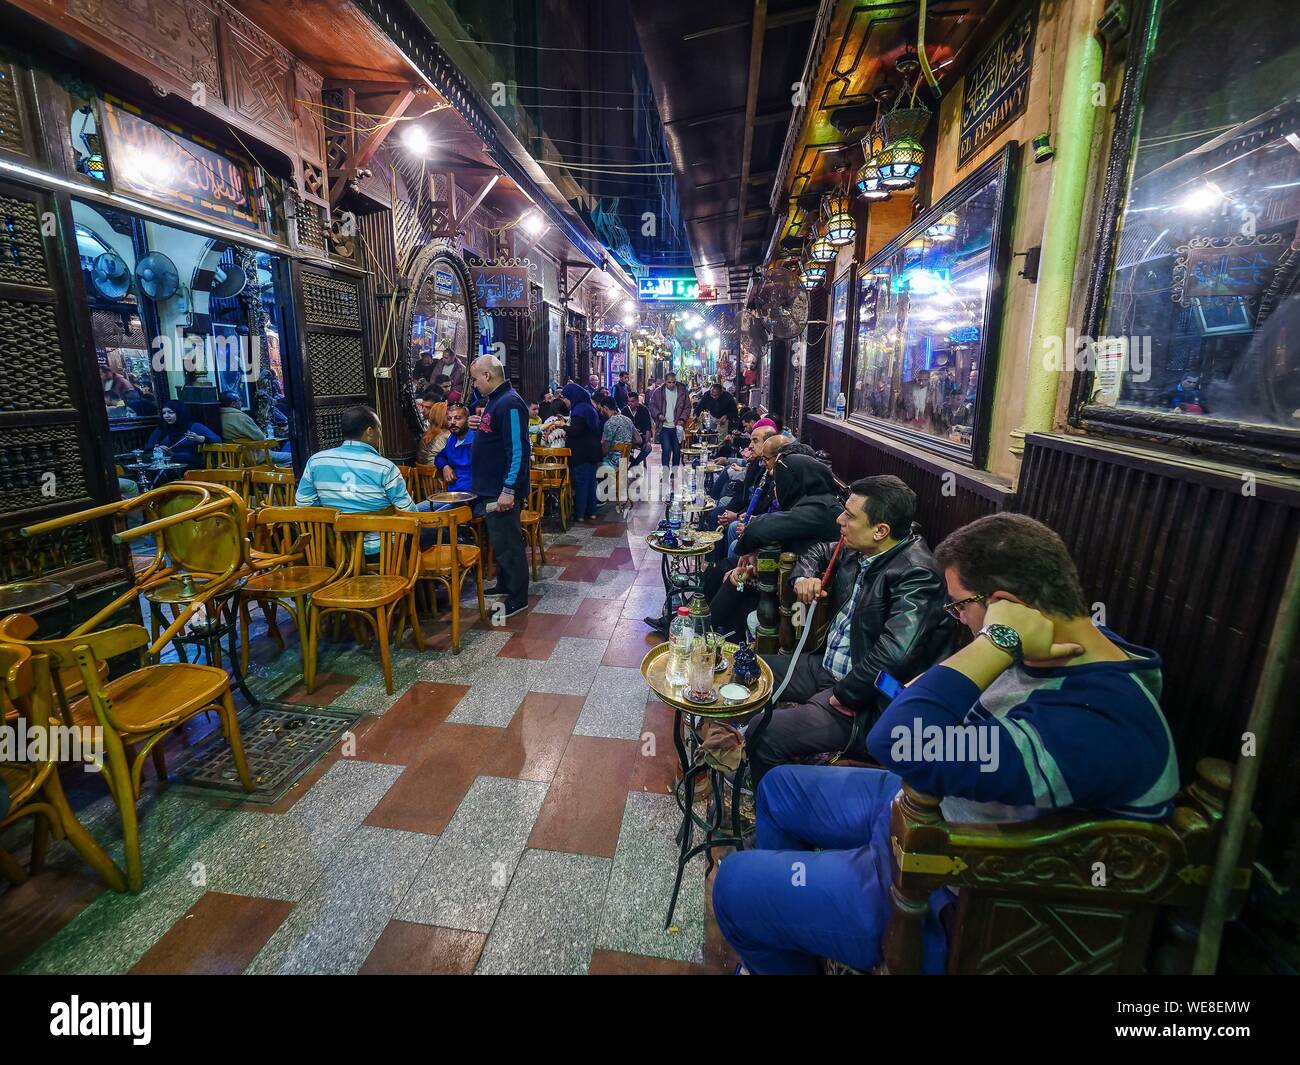 Egypt, Cairo, Café El-Fishawi located in the souk Khan el-Khalili Stock Photo